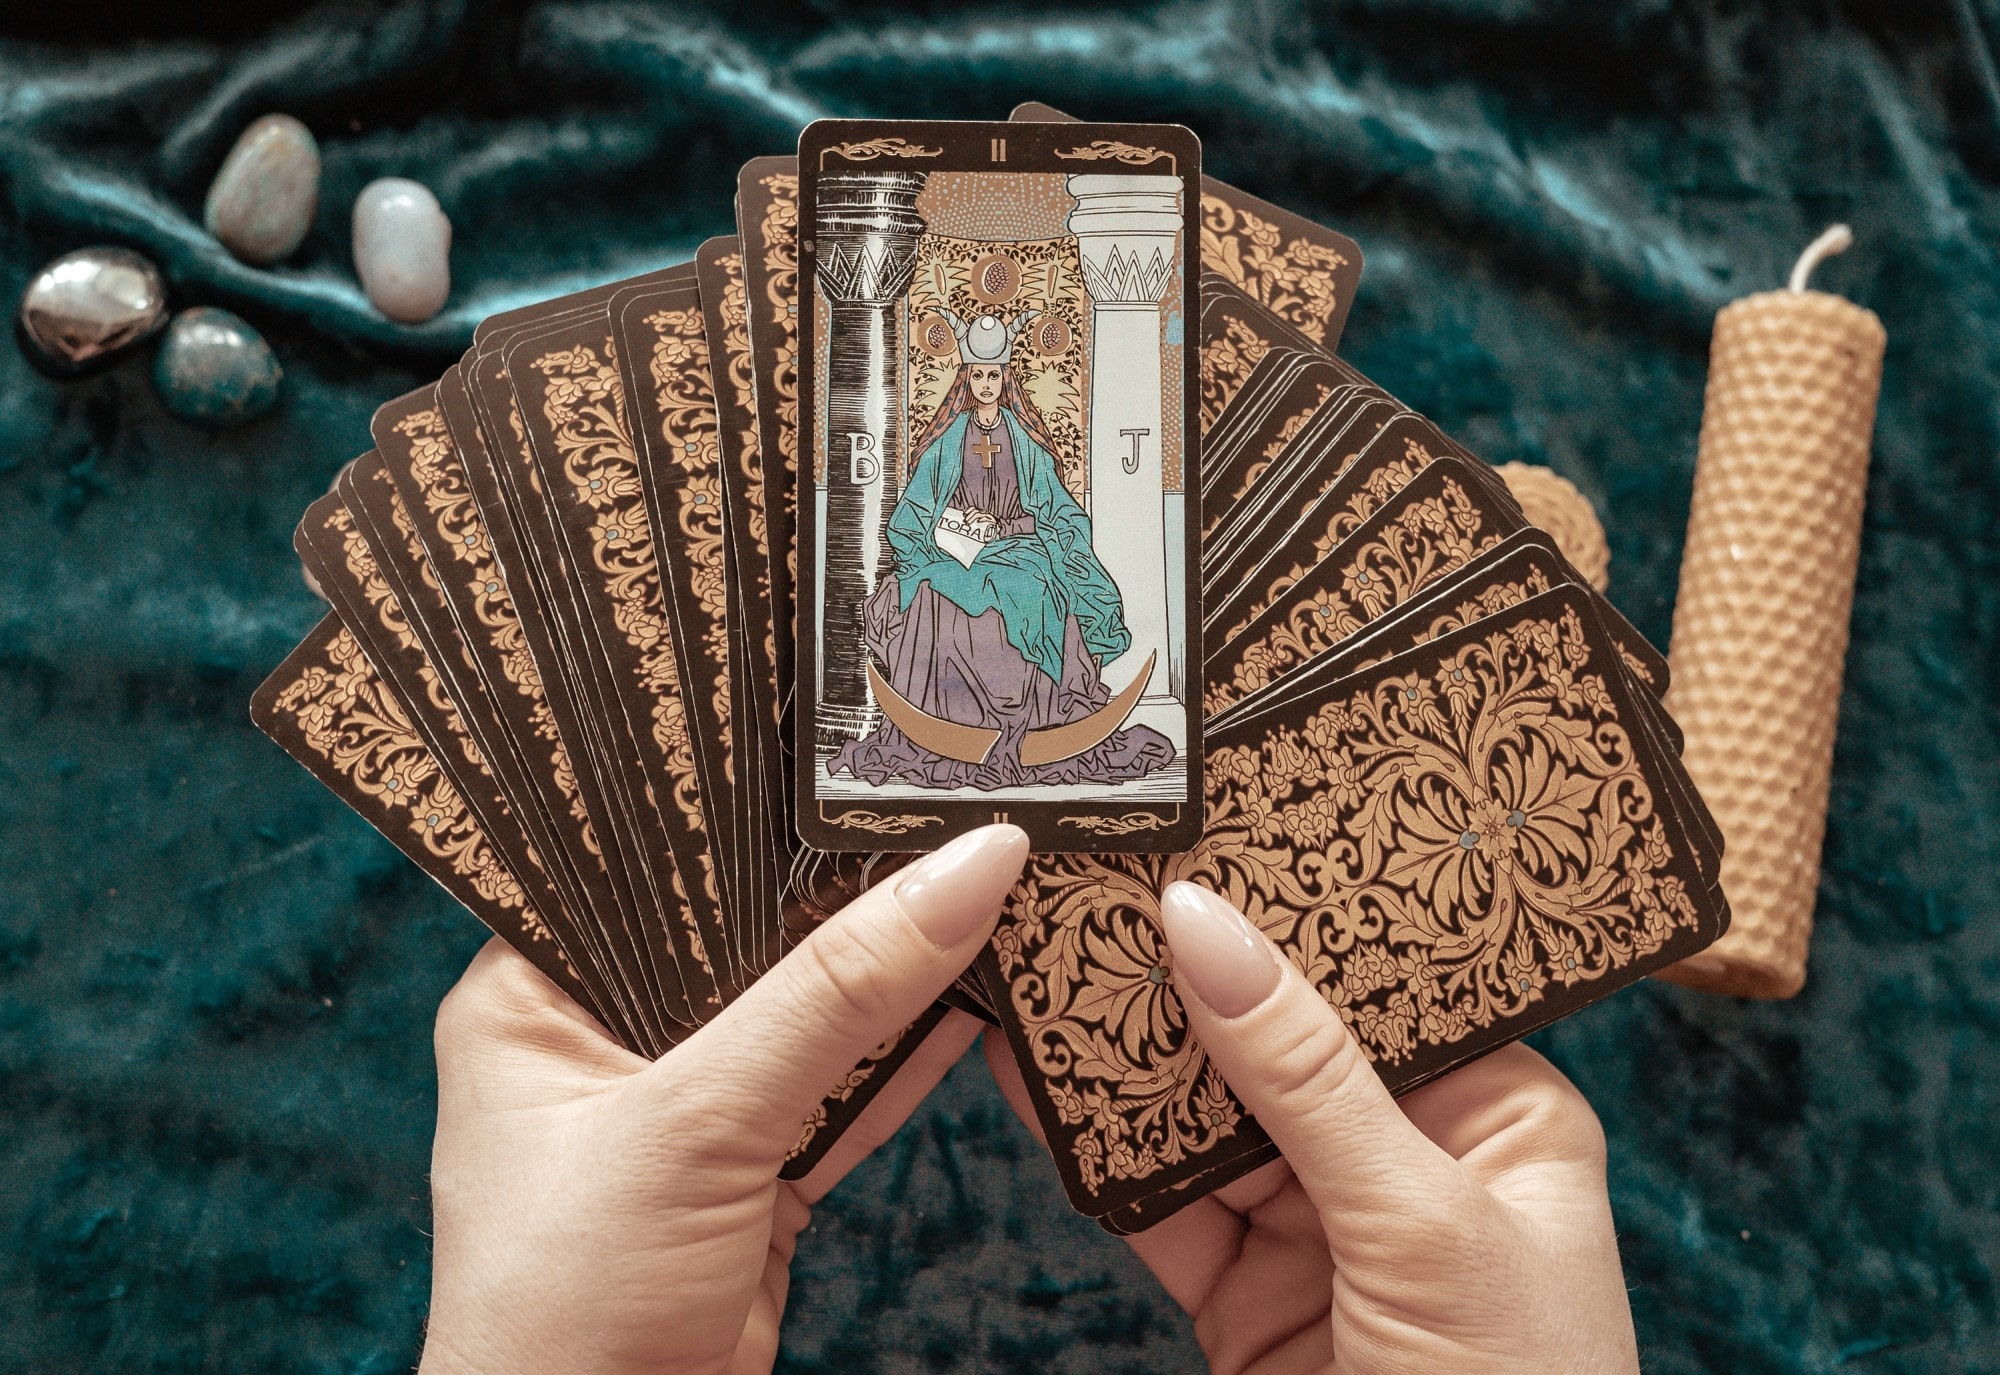 Love Tarot and The High Priestess Card